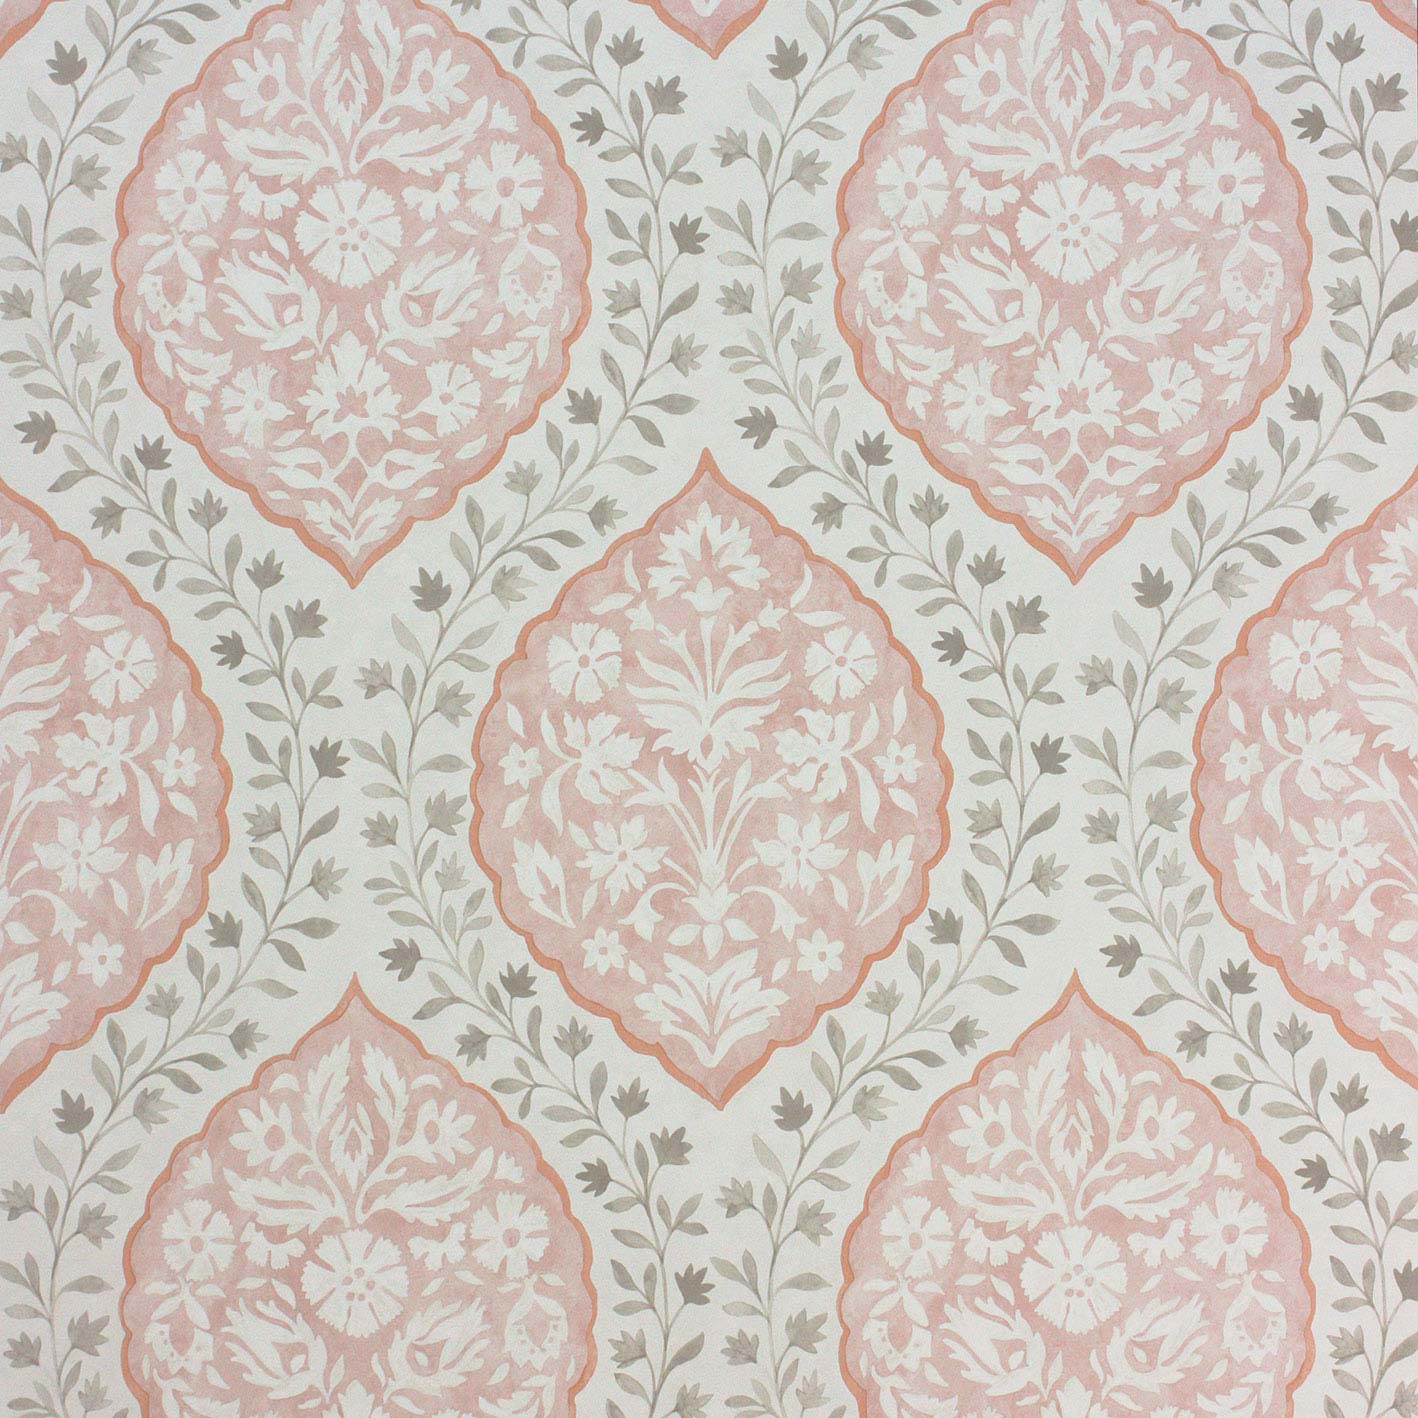 Nina Campbell Wallpaper - Les Rêves Marguerite Pink/Grey NCW4304-03